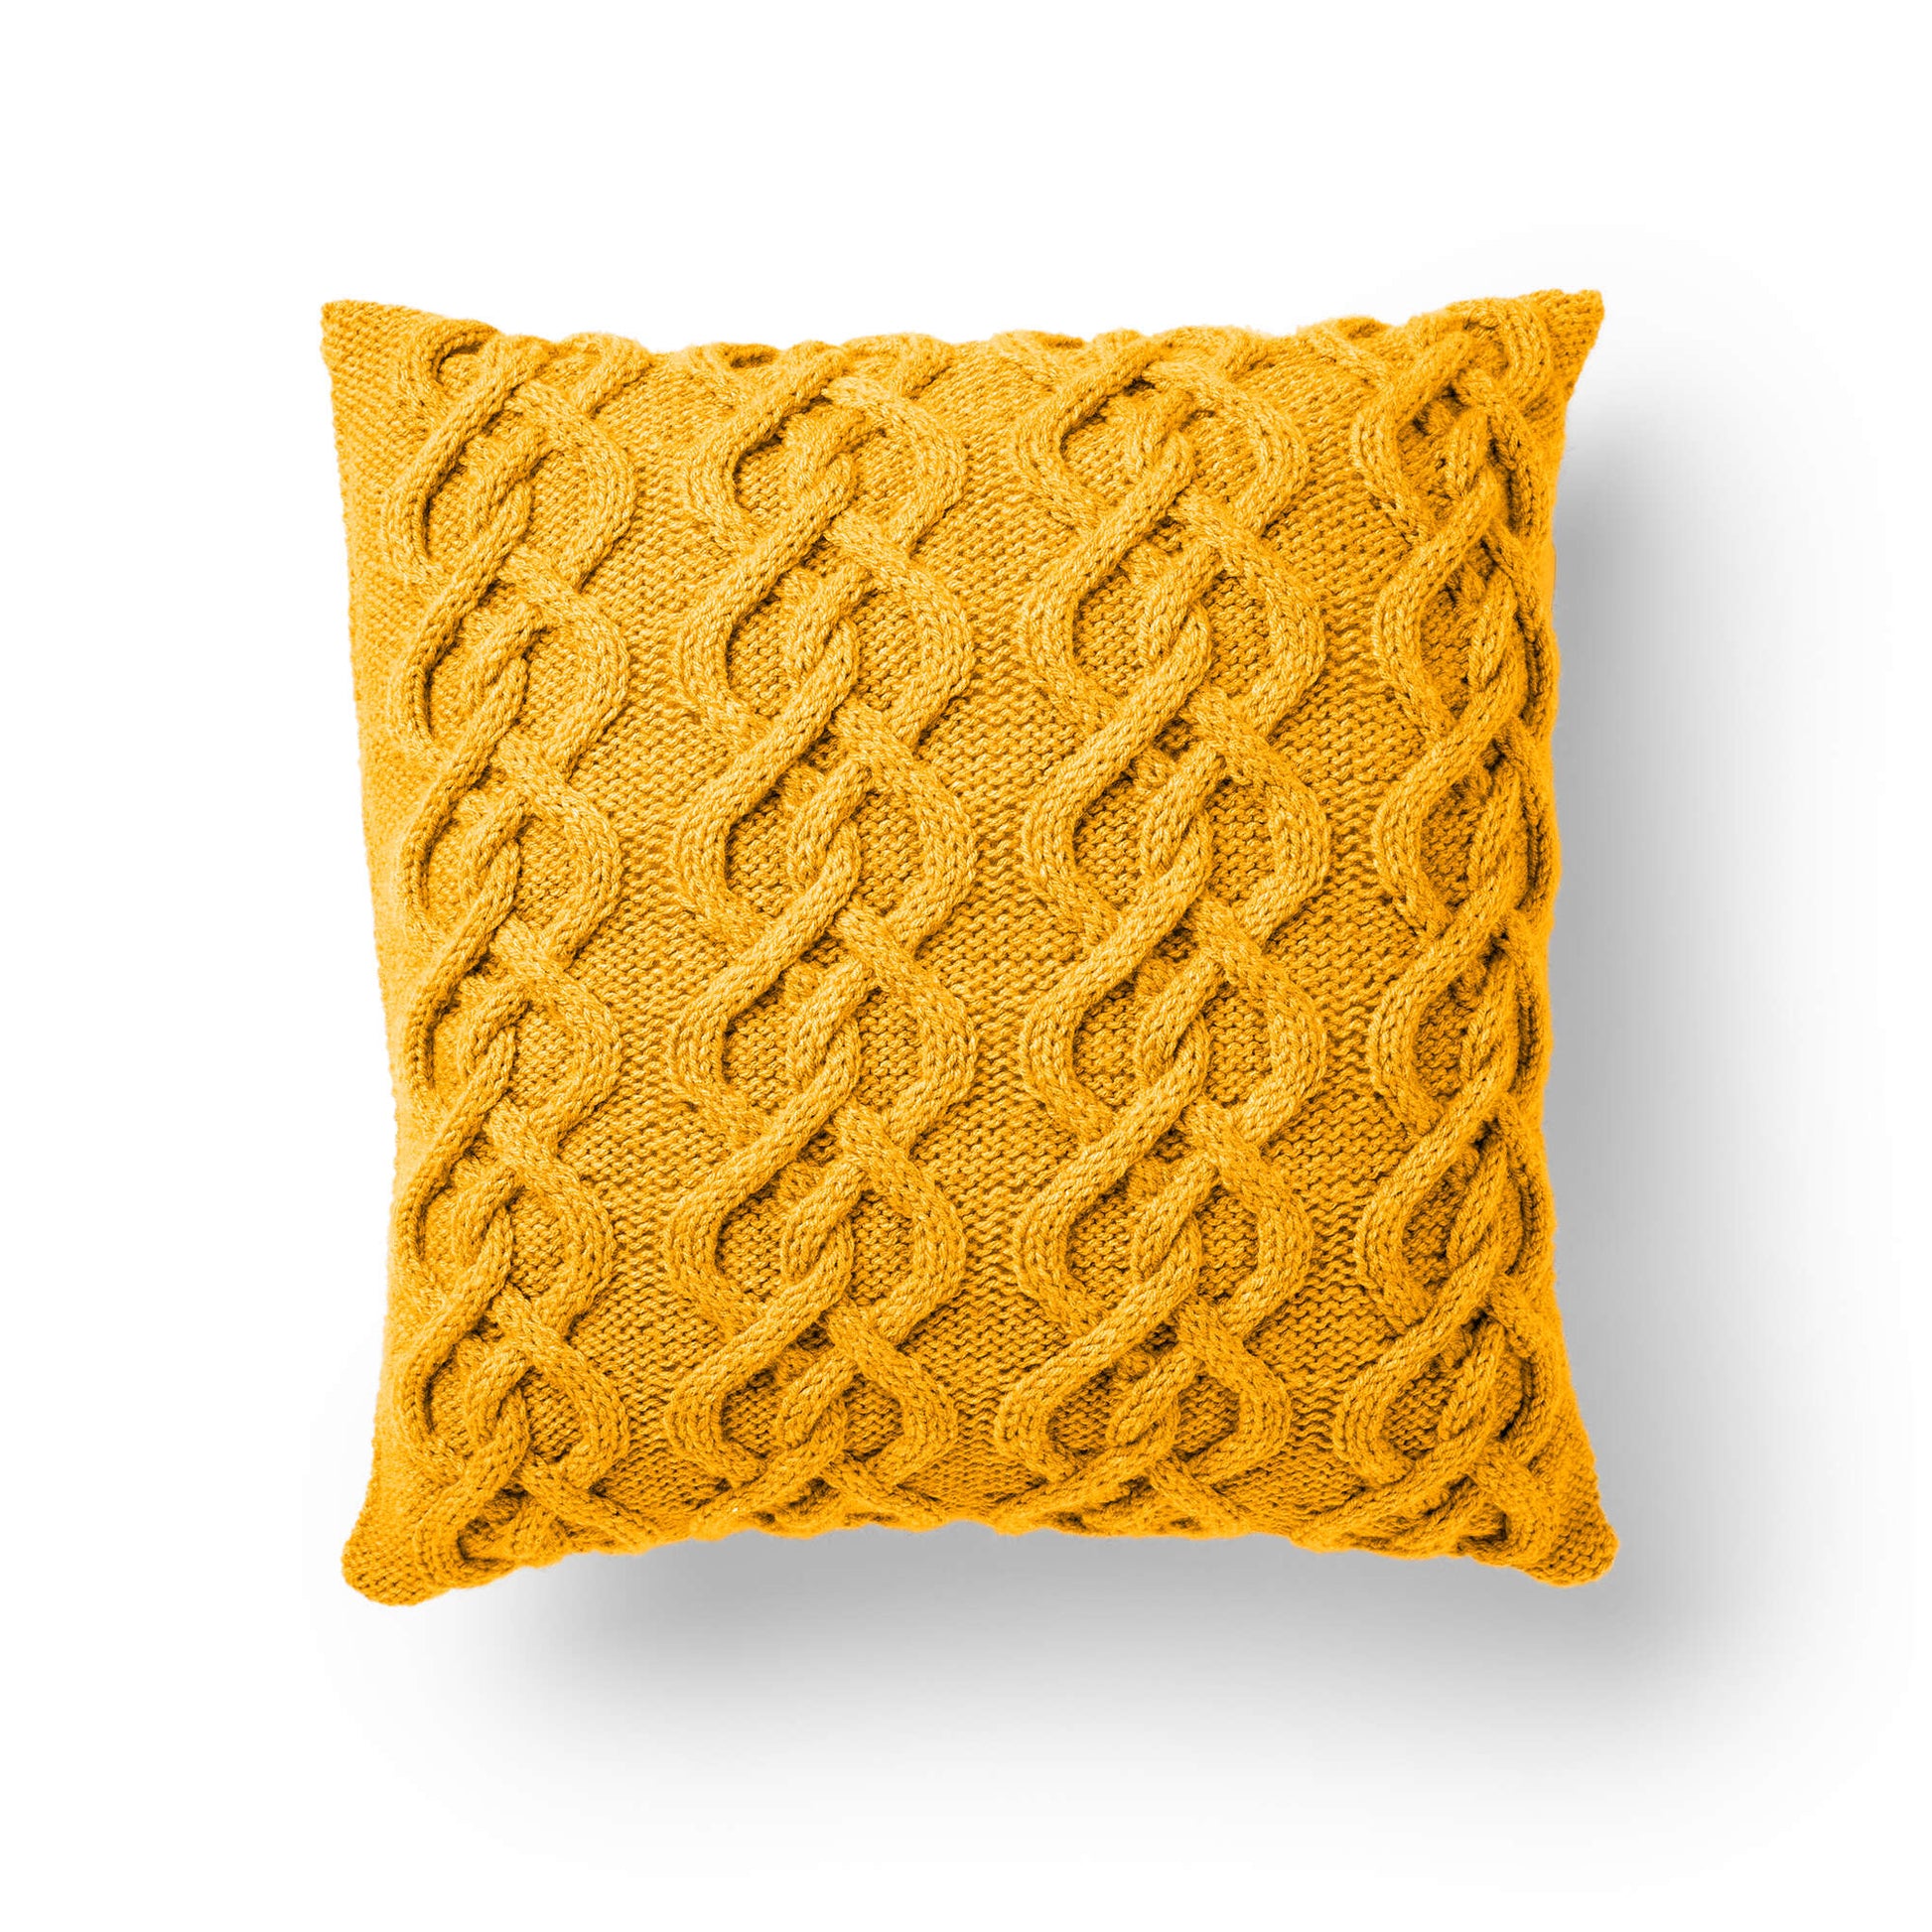 Free Caron Cable Knit Pillow Pattern